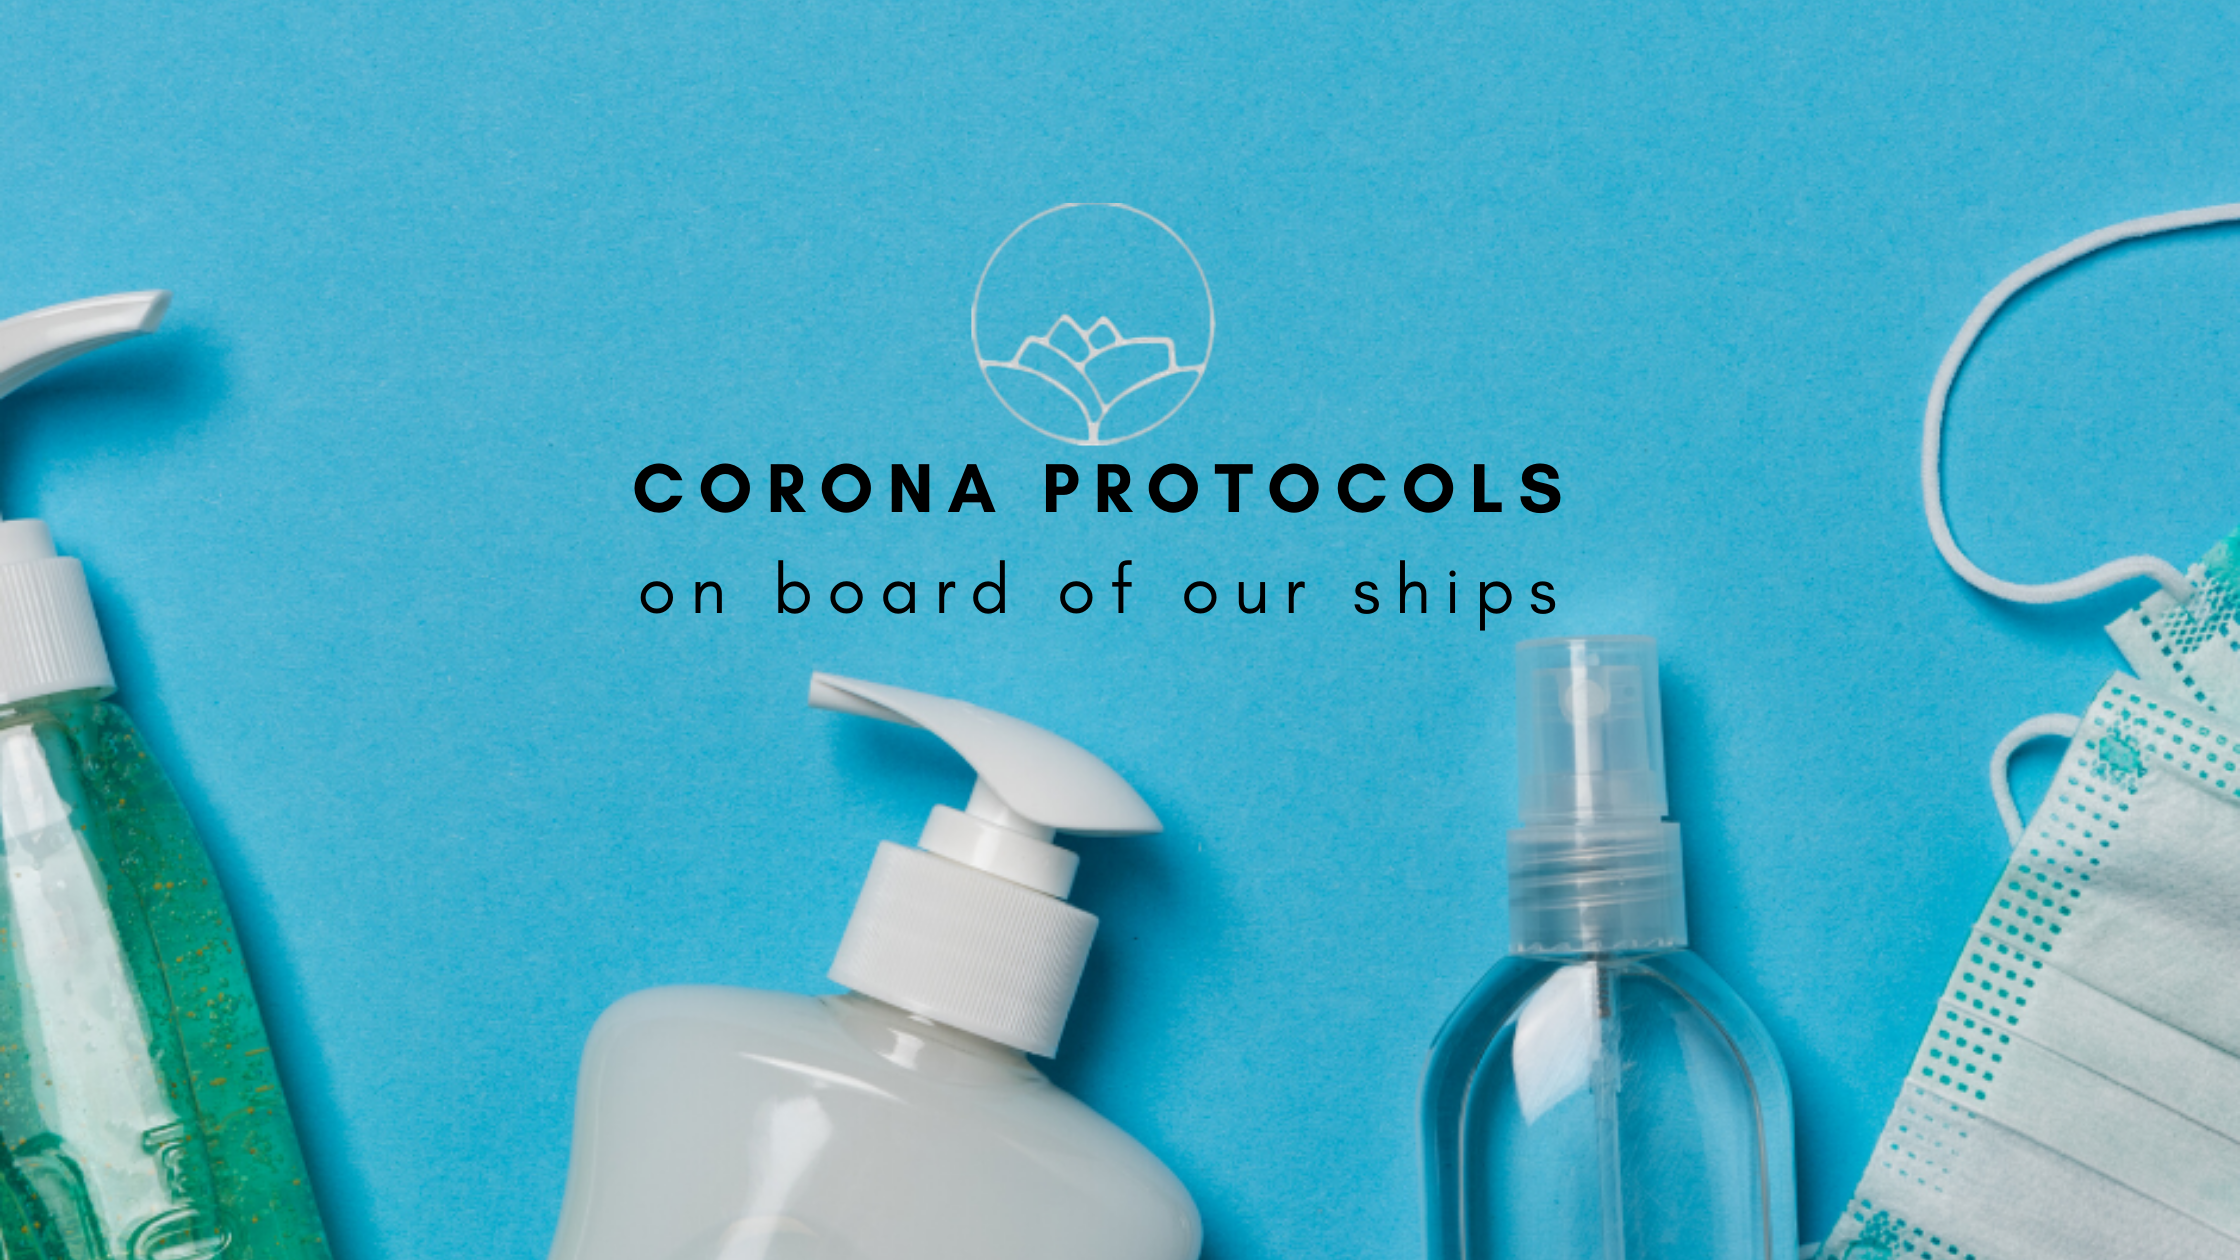 Corona protocols on our ships